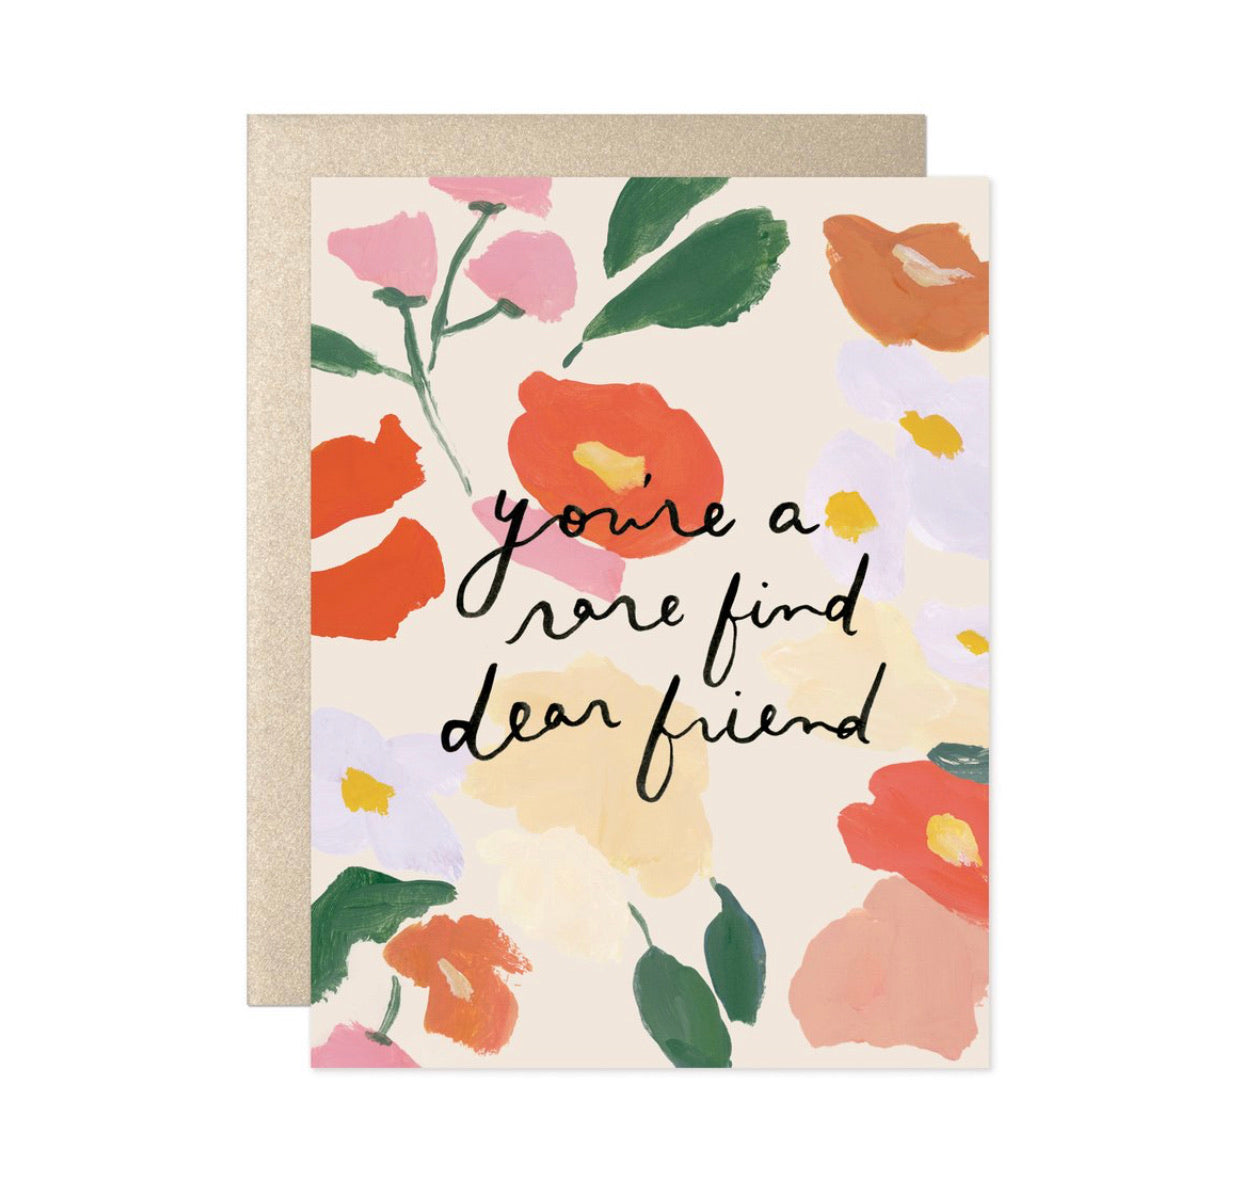 Rare find Dear Friend Card